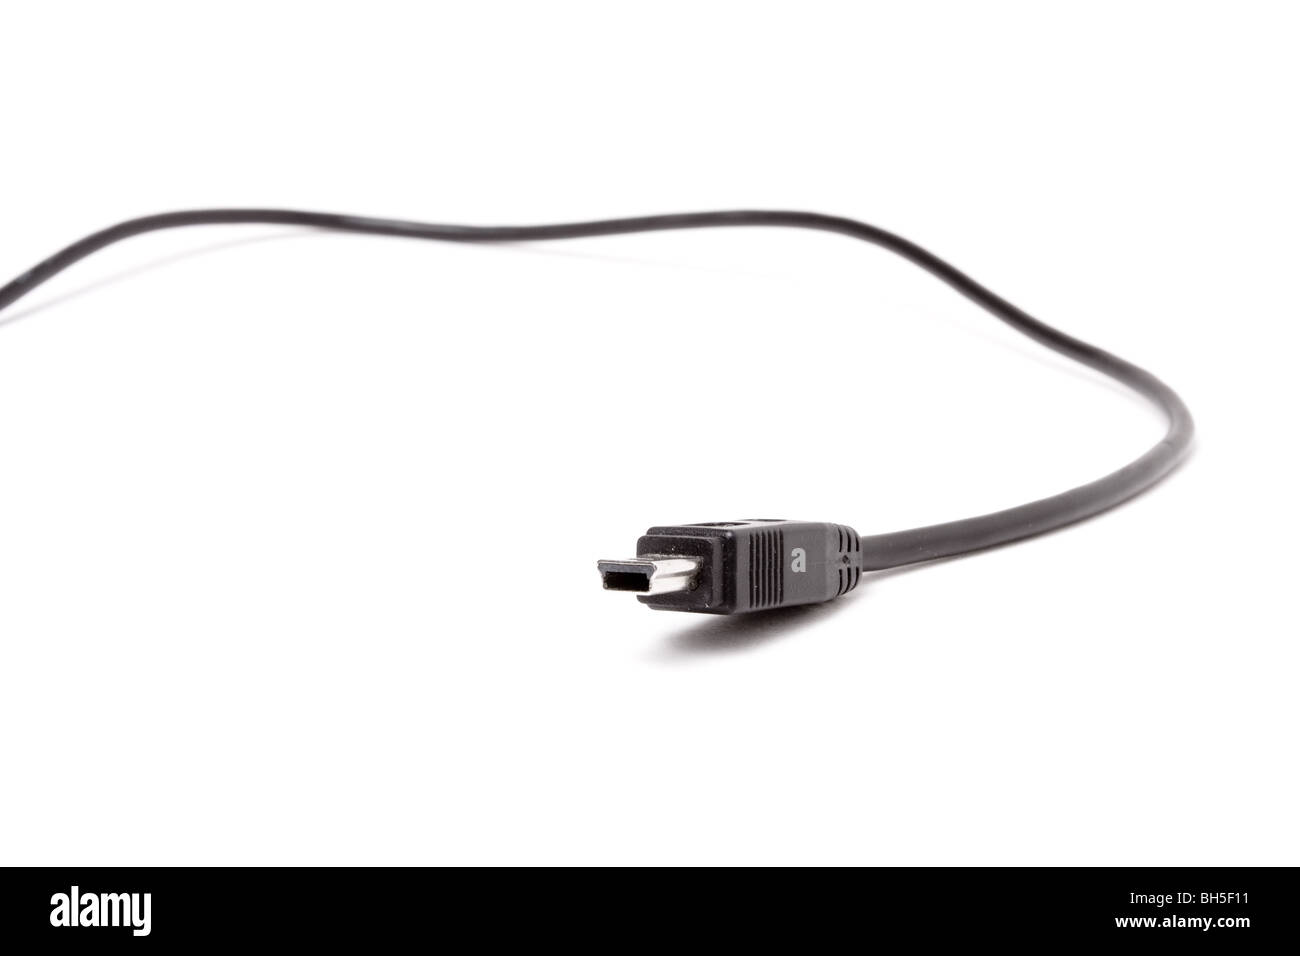 Black Mini USB Cable close up isolated against white background. Stock Photo